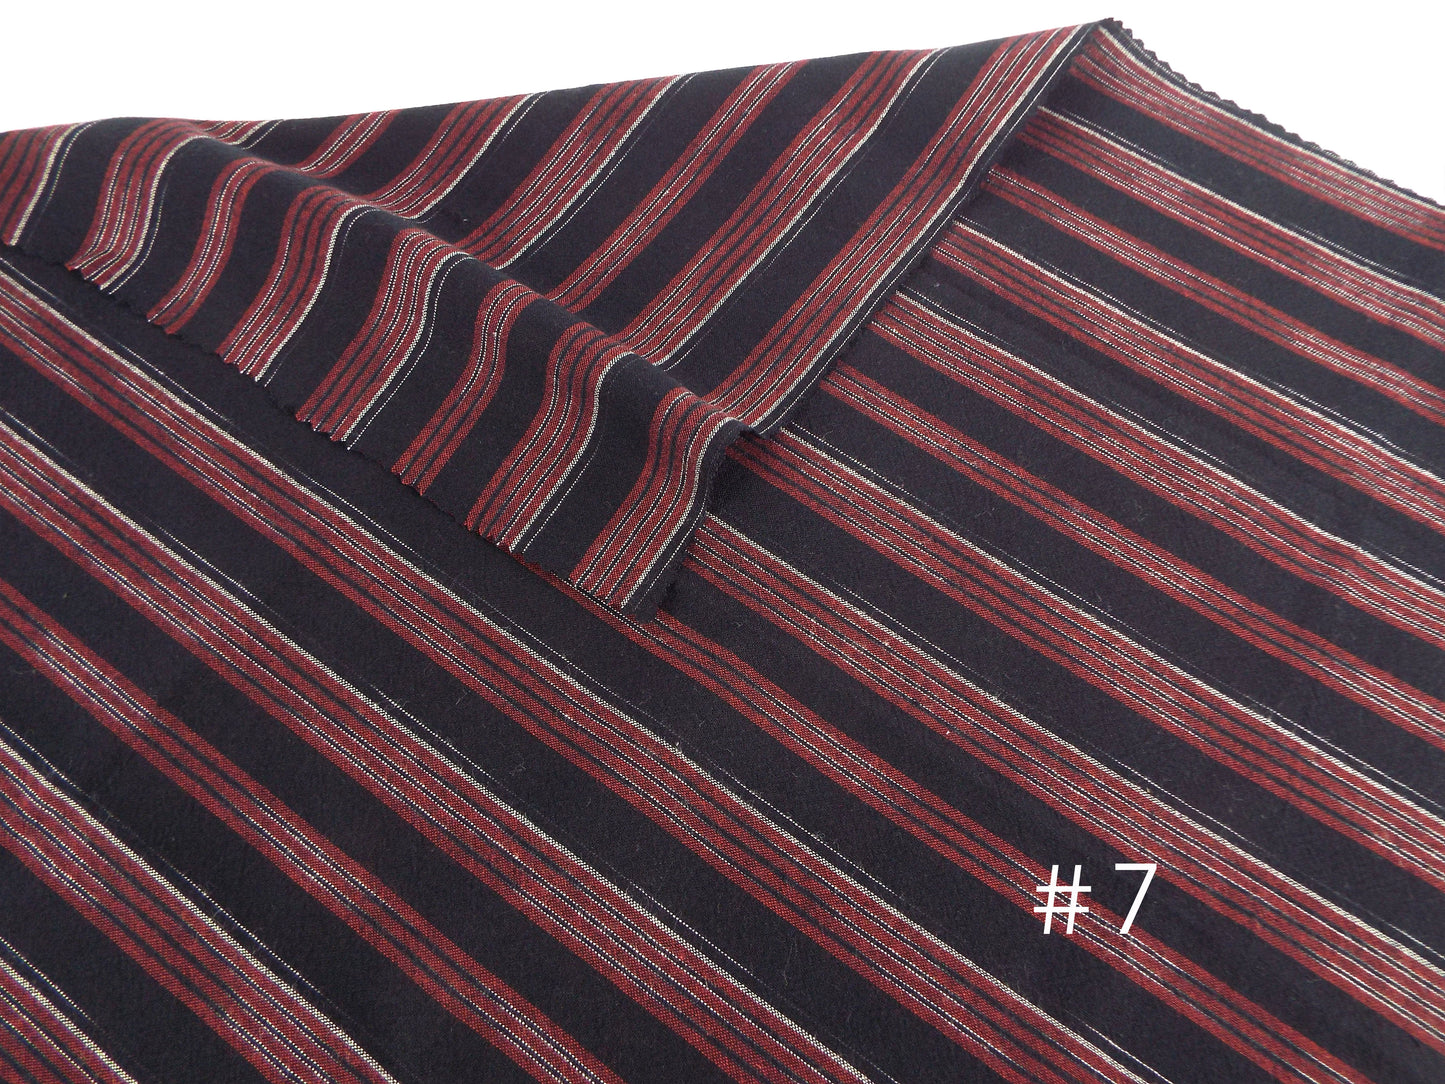 Kameda striped cotton fabric ordinary ground # 6,7,8 3 patterns